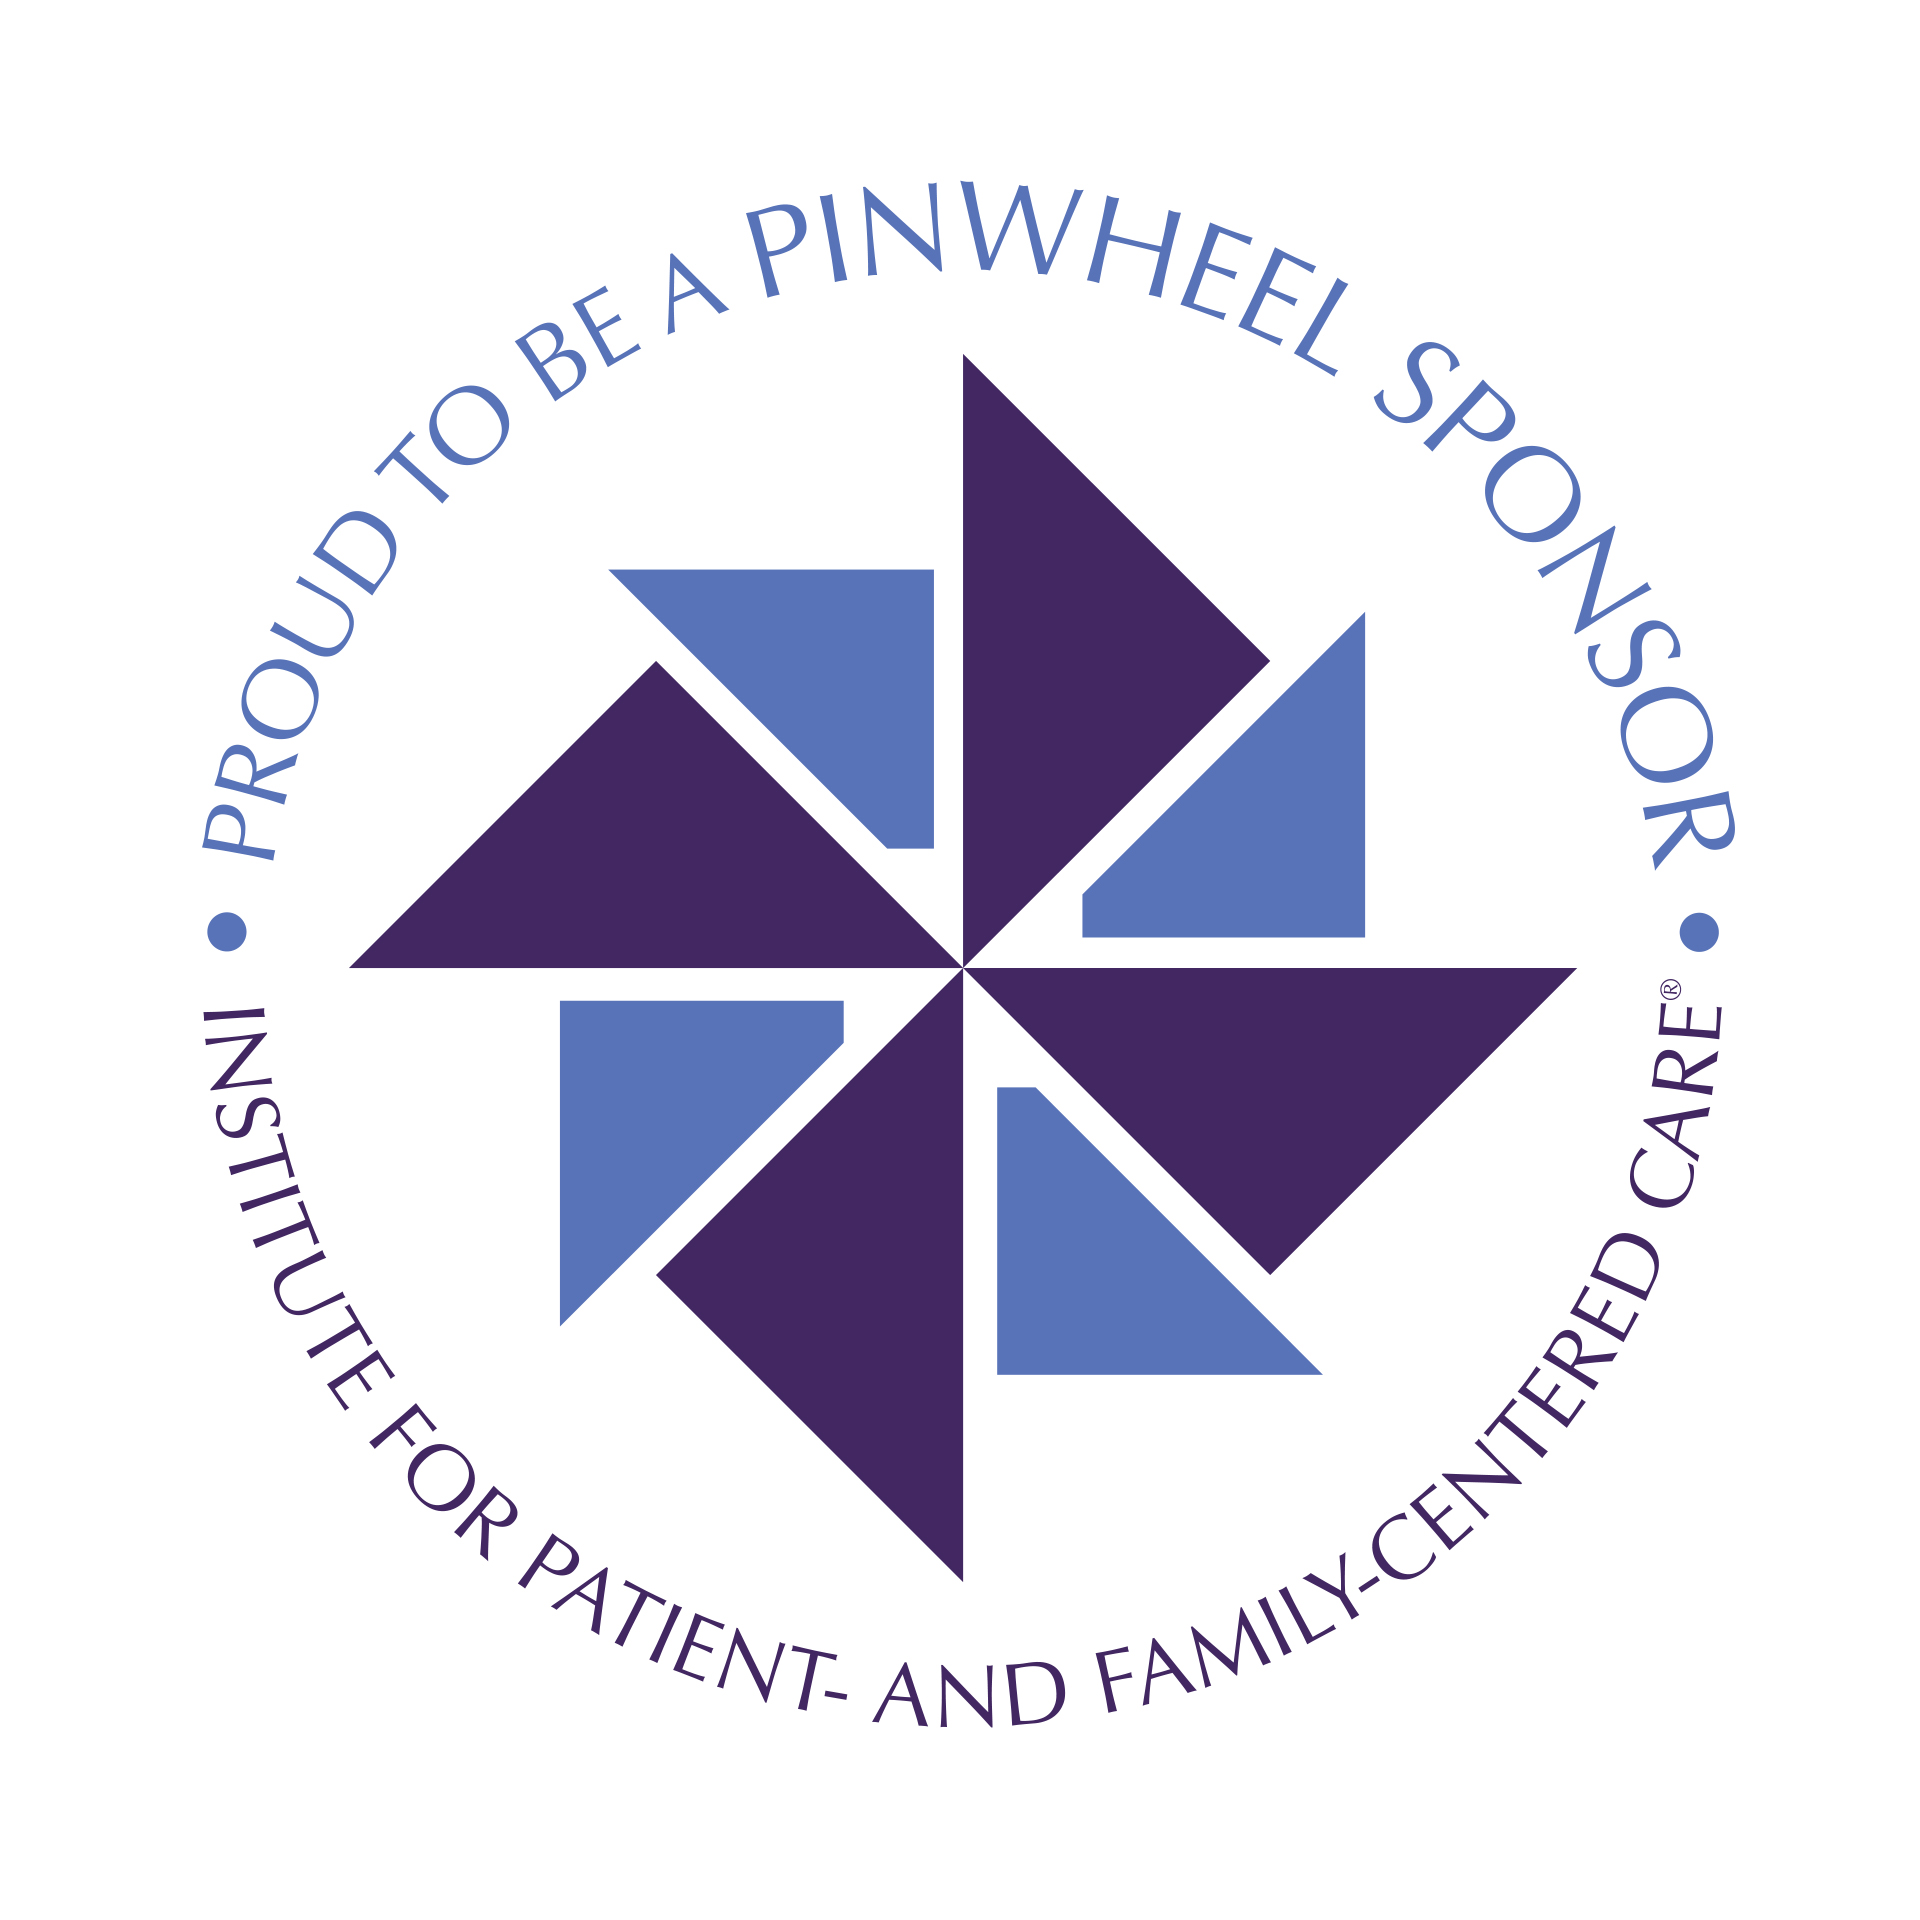 Pinwheel Emblem of Commitment